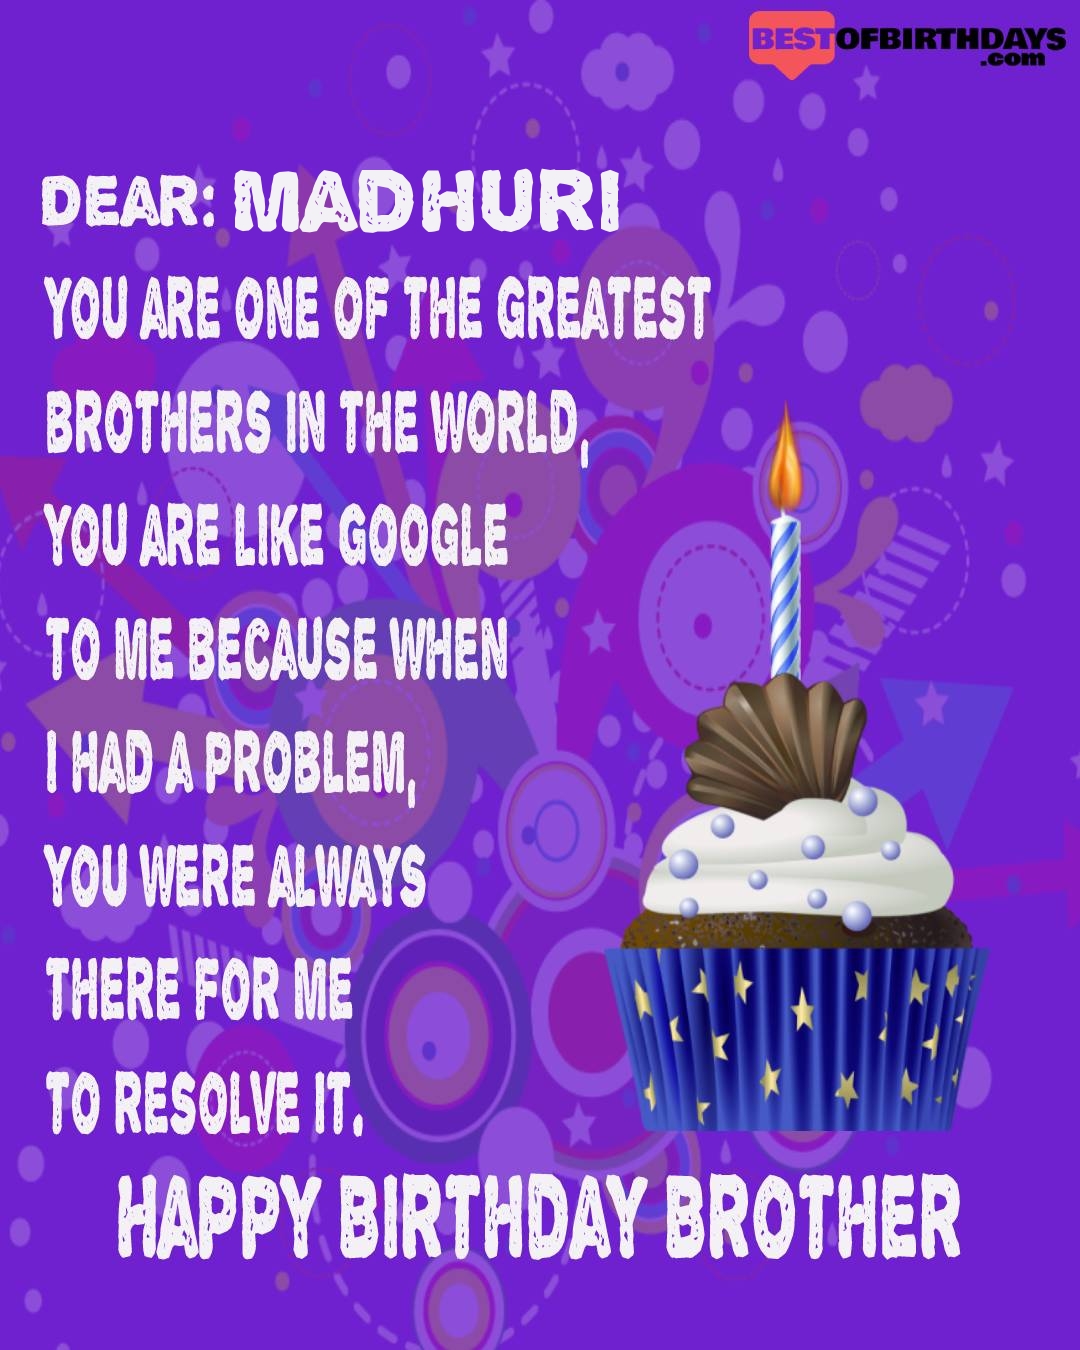 Happy birthday madhuri bhai brother bro